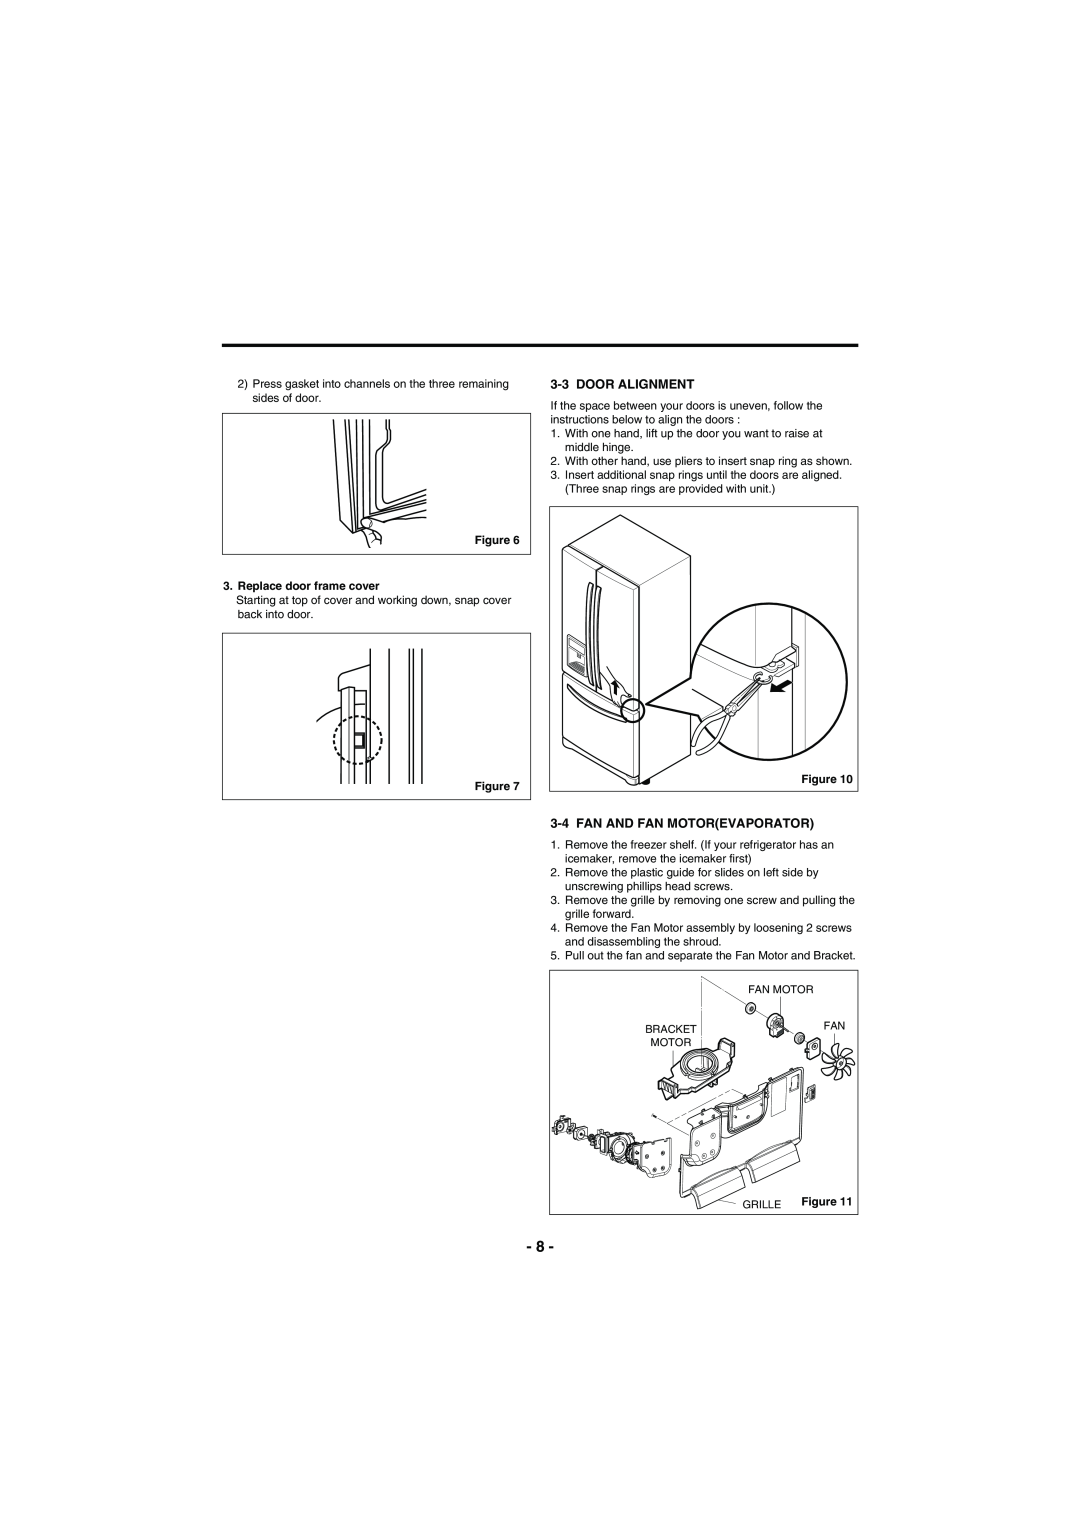 Kenmore 795-71022.010 service manual Door Alignment, Fan And Fan Motorevaporator, Replace door frame cover 